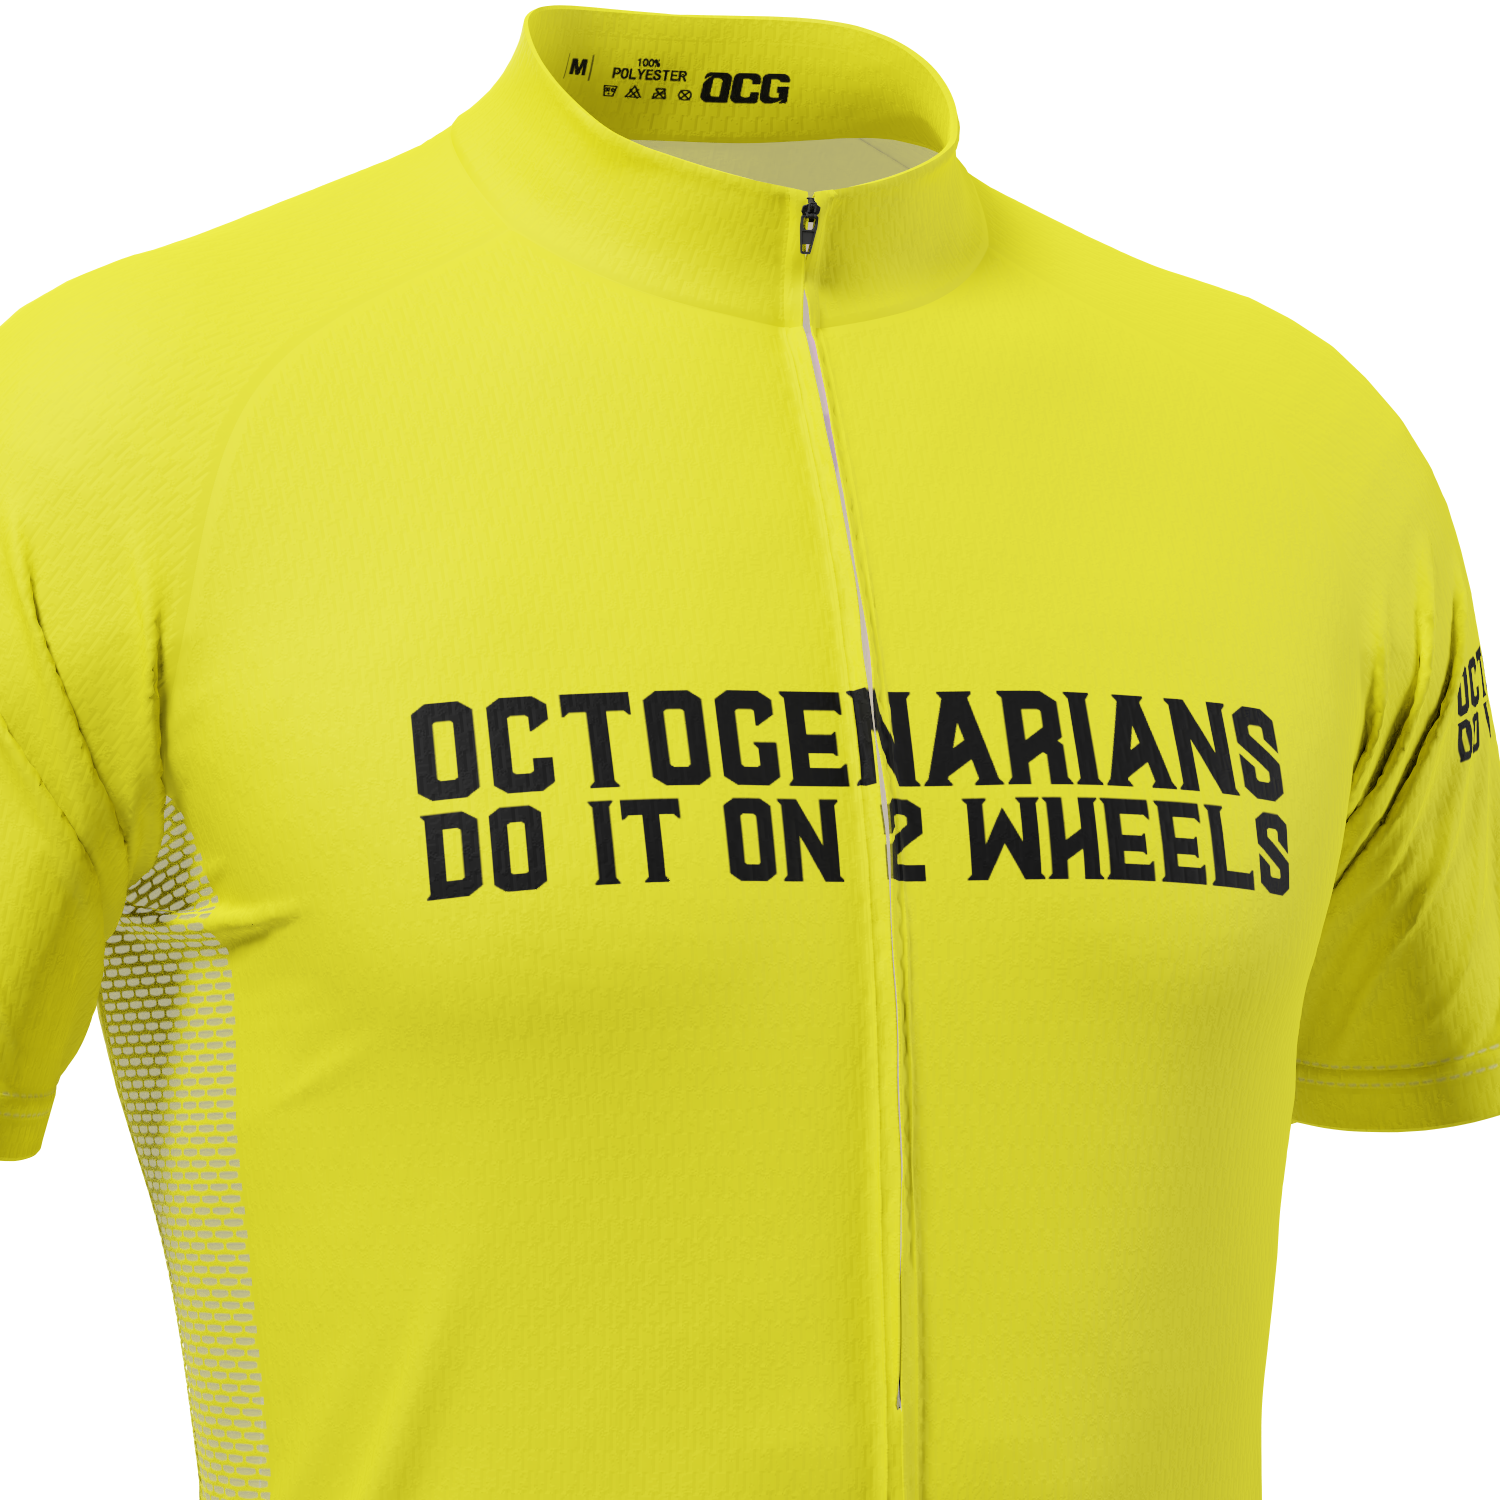 Men's High Viz Octogenarian Short Sleeve Cycling Jersey